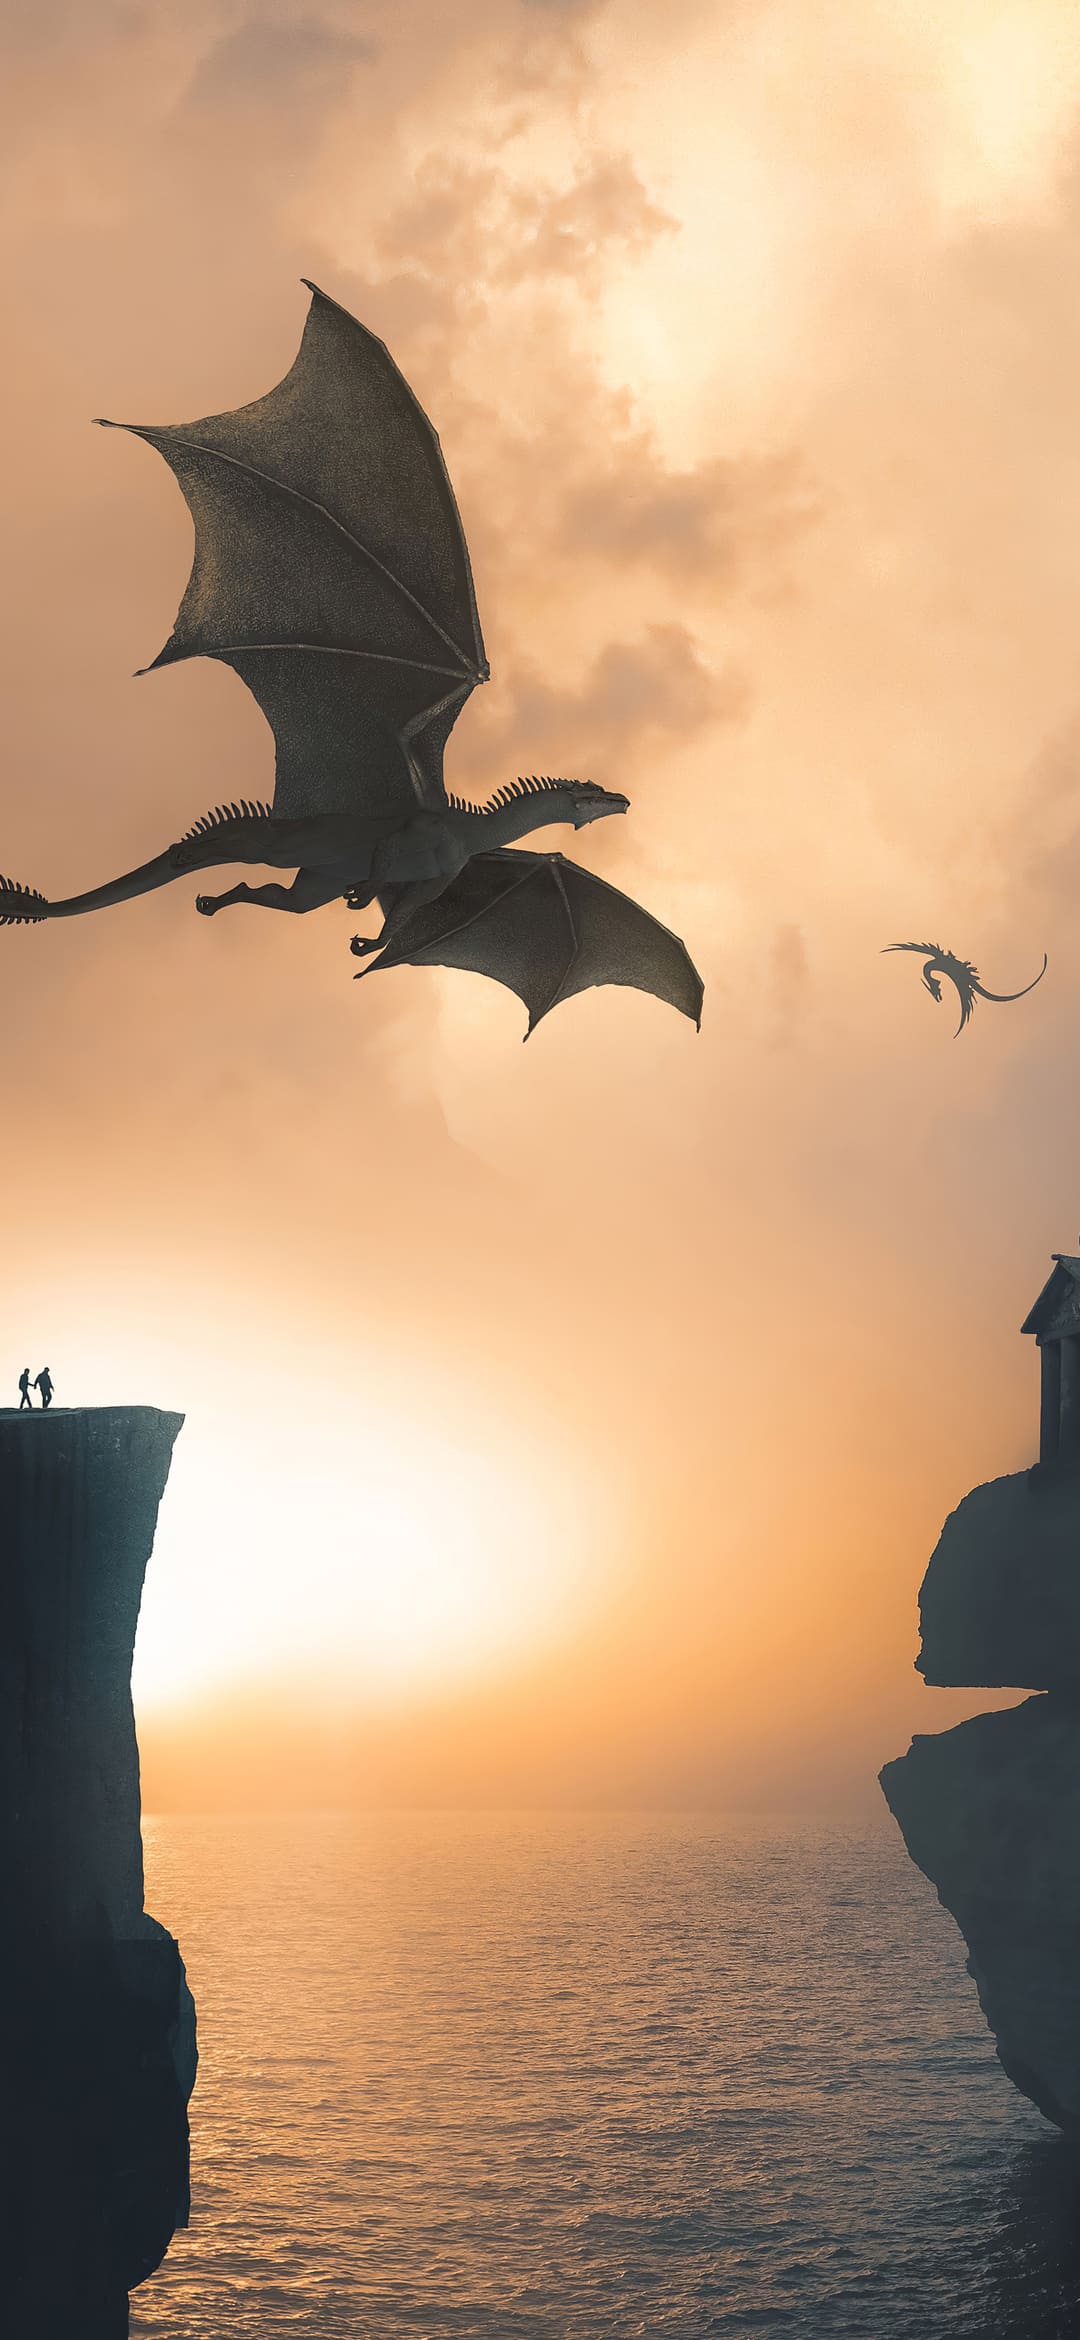 Best Dragon iPhone Wallpaper